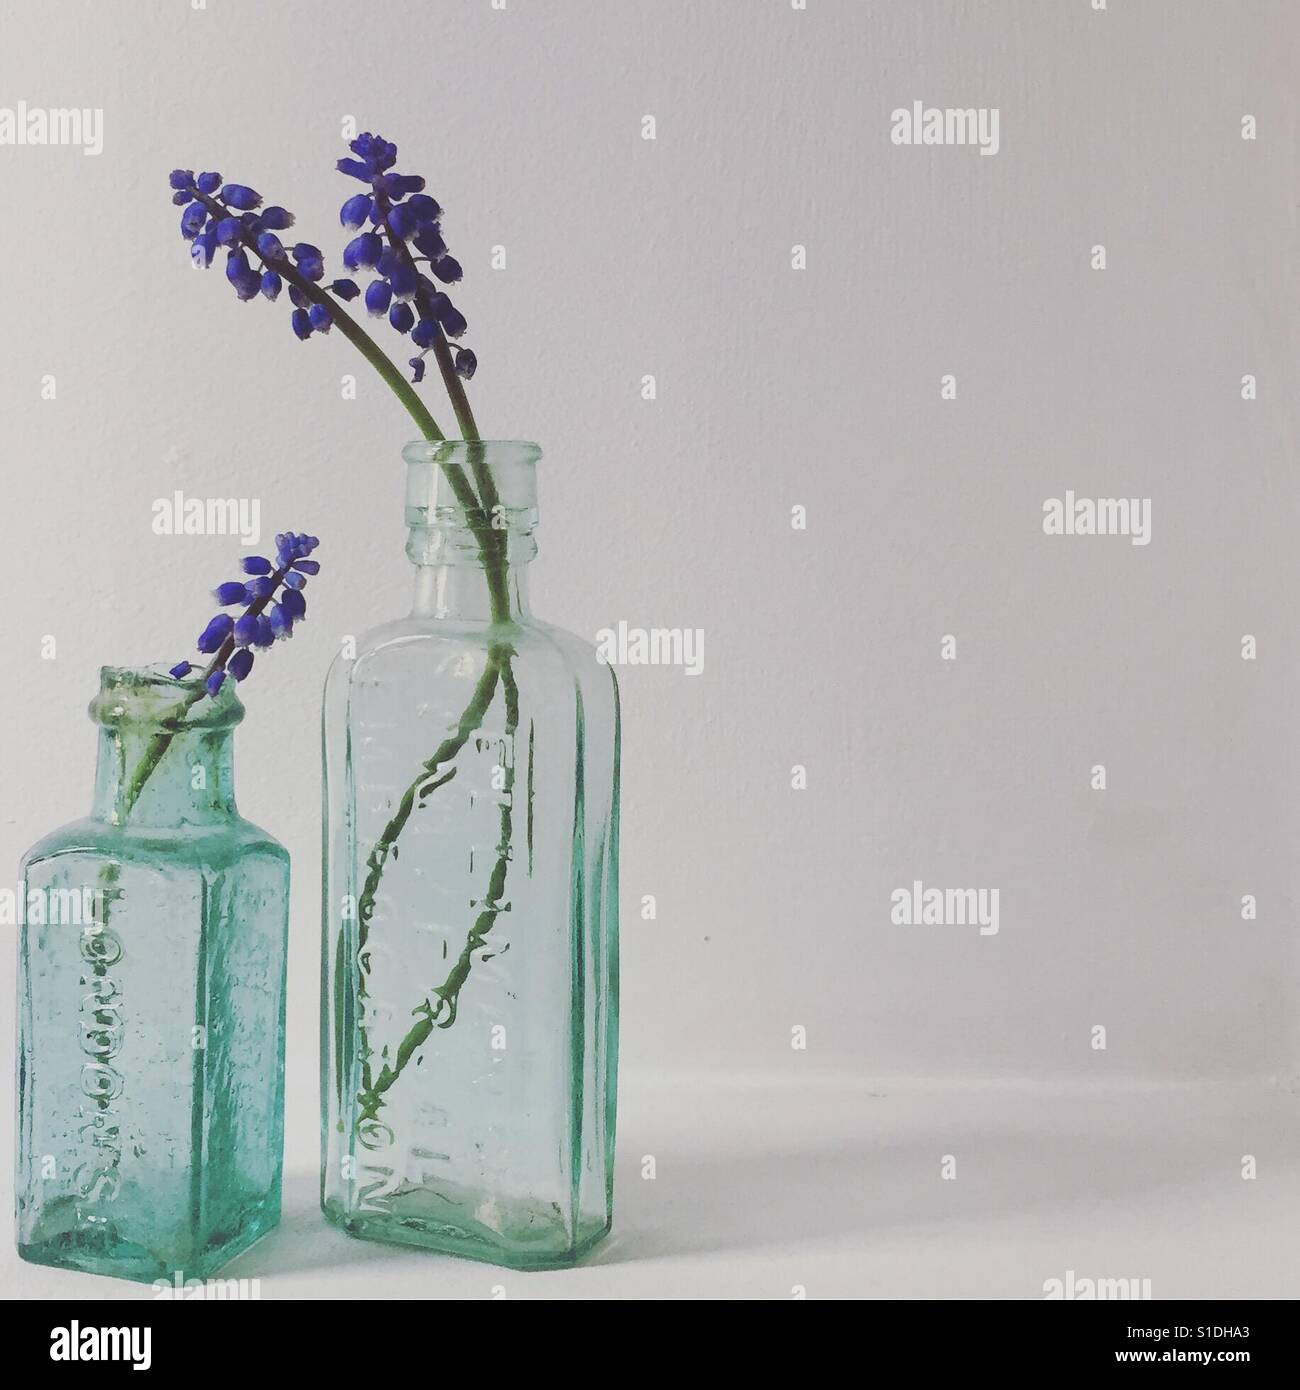 Grape hyacinths in glass medicine bottles Stock Photo